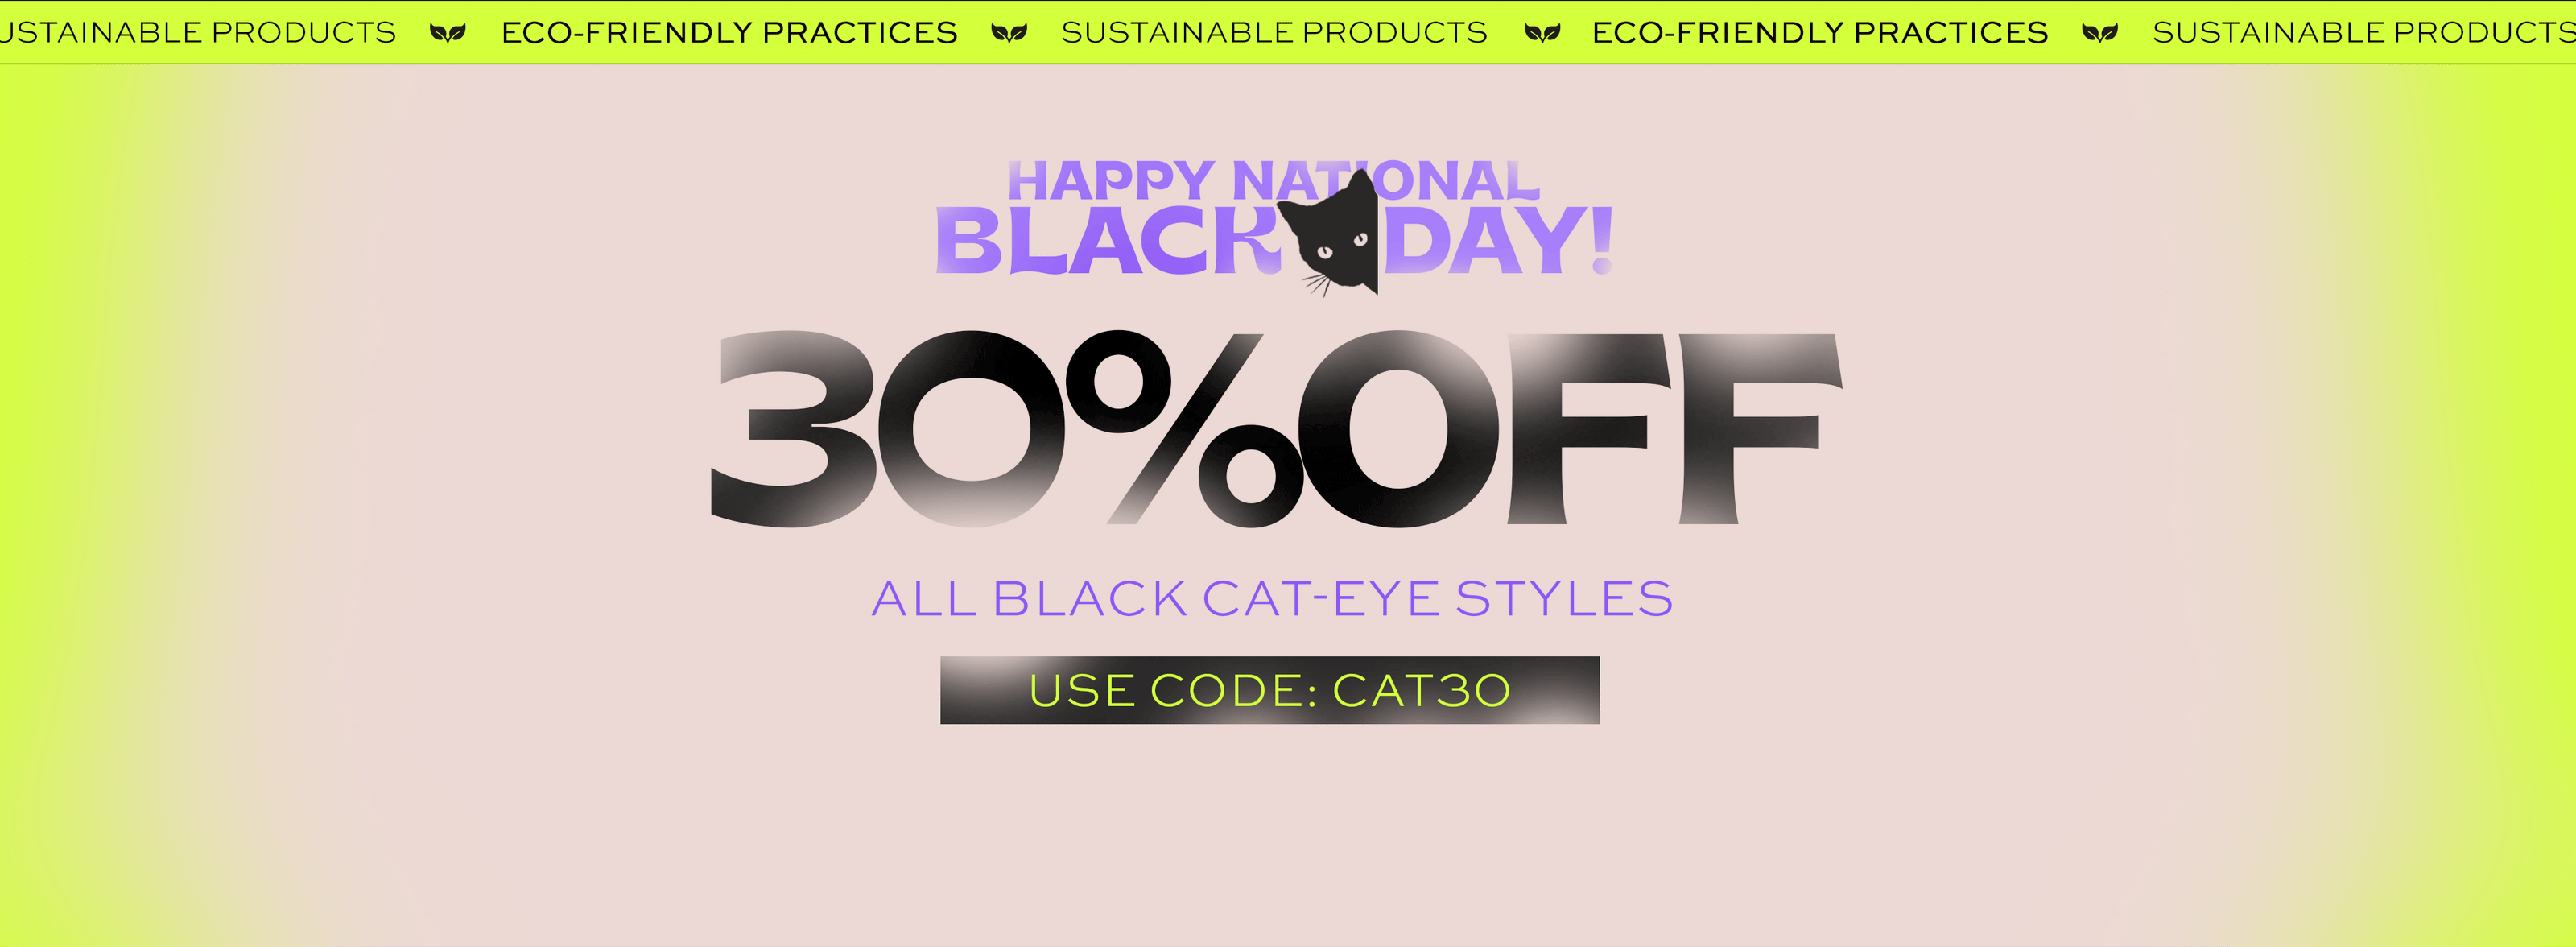 Black Cateye Sunglasses